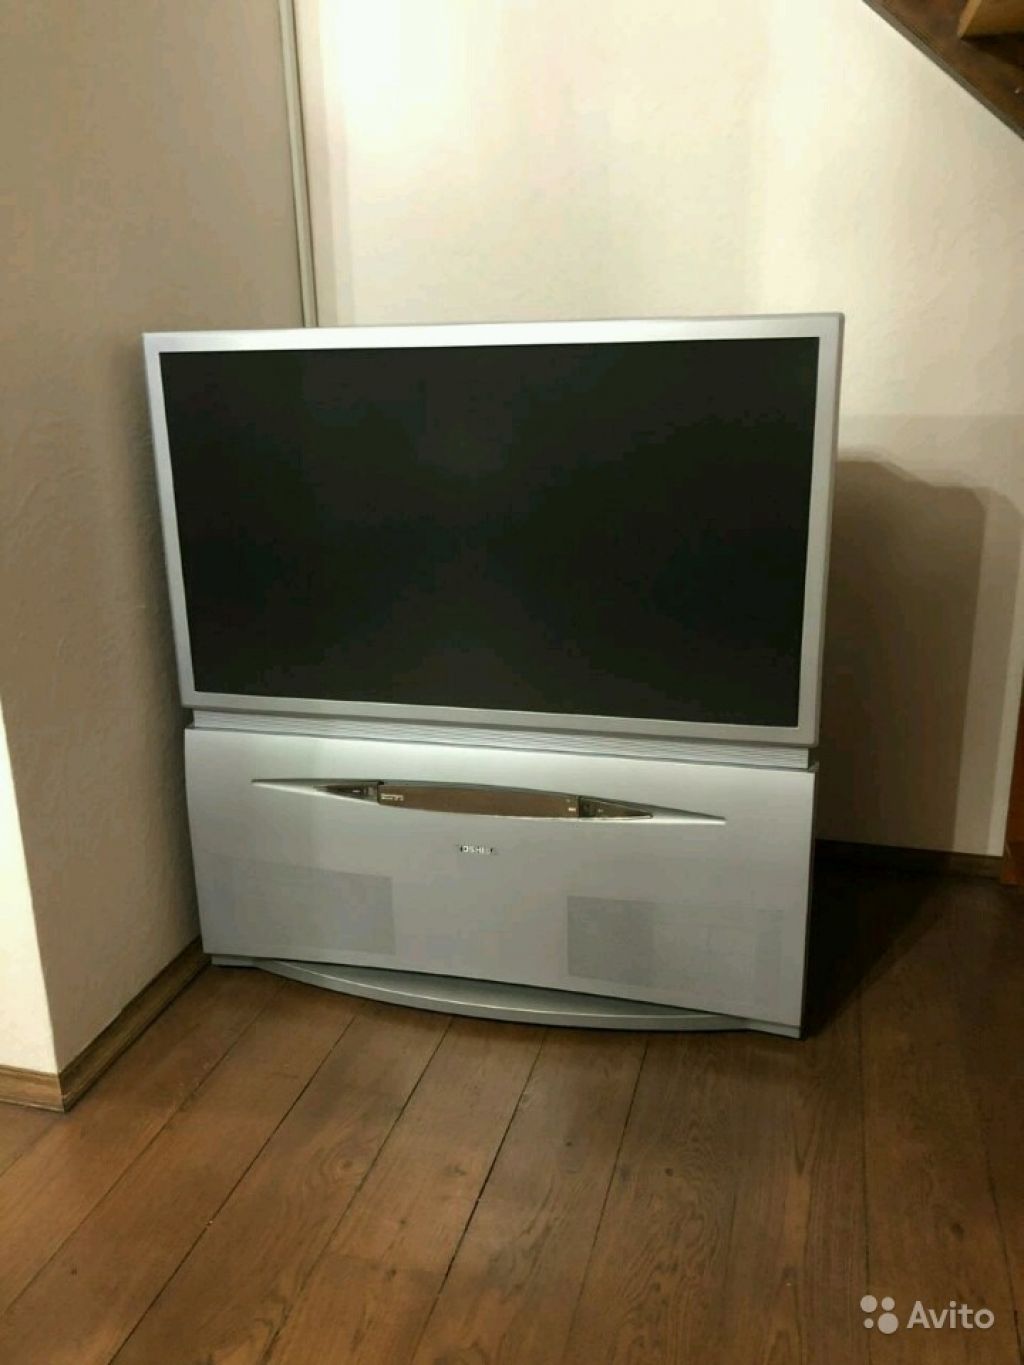 Проекционный телевизор Toshiba 61g9uxc